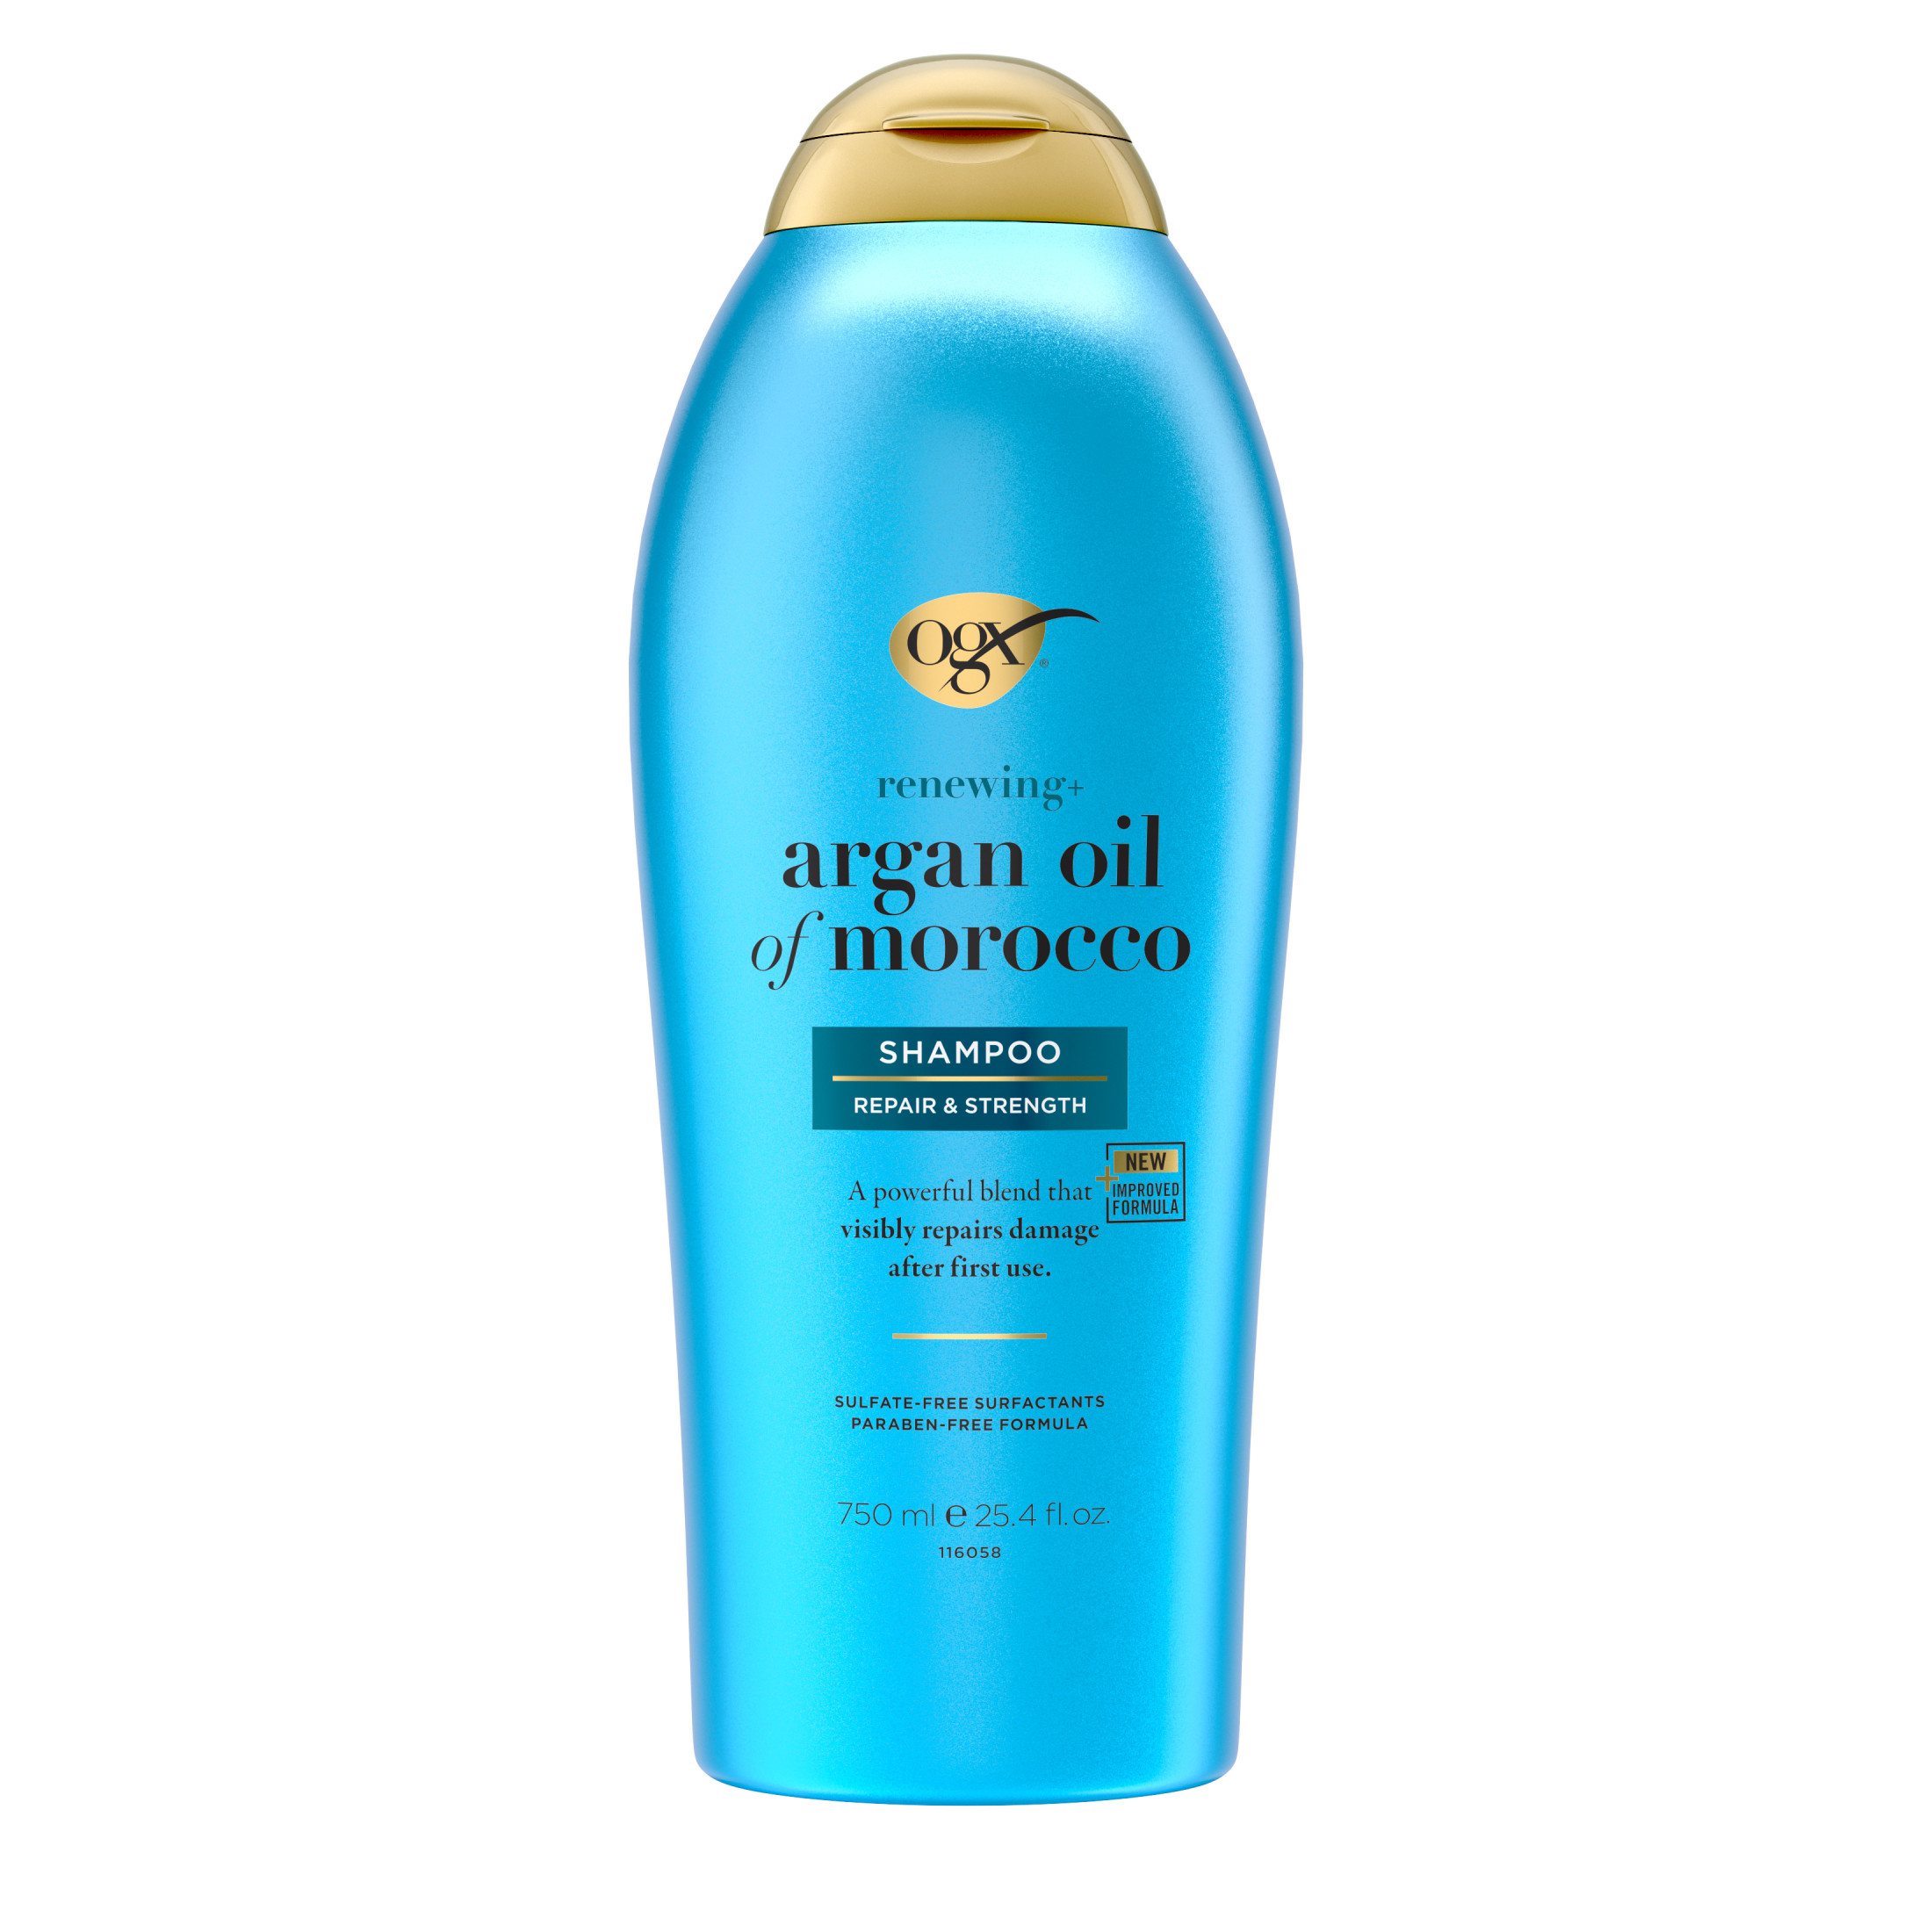 OGX Renewing + Argan Oil Moisturizing Daily Shampoo to Soften & Strengthen, 25.4 fl oz - image 1 of 9